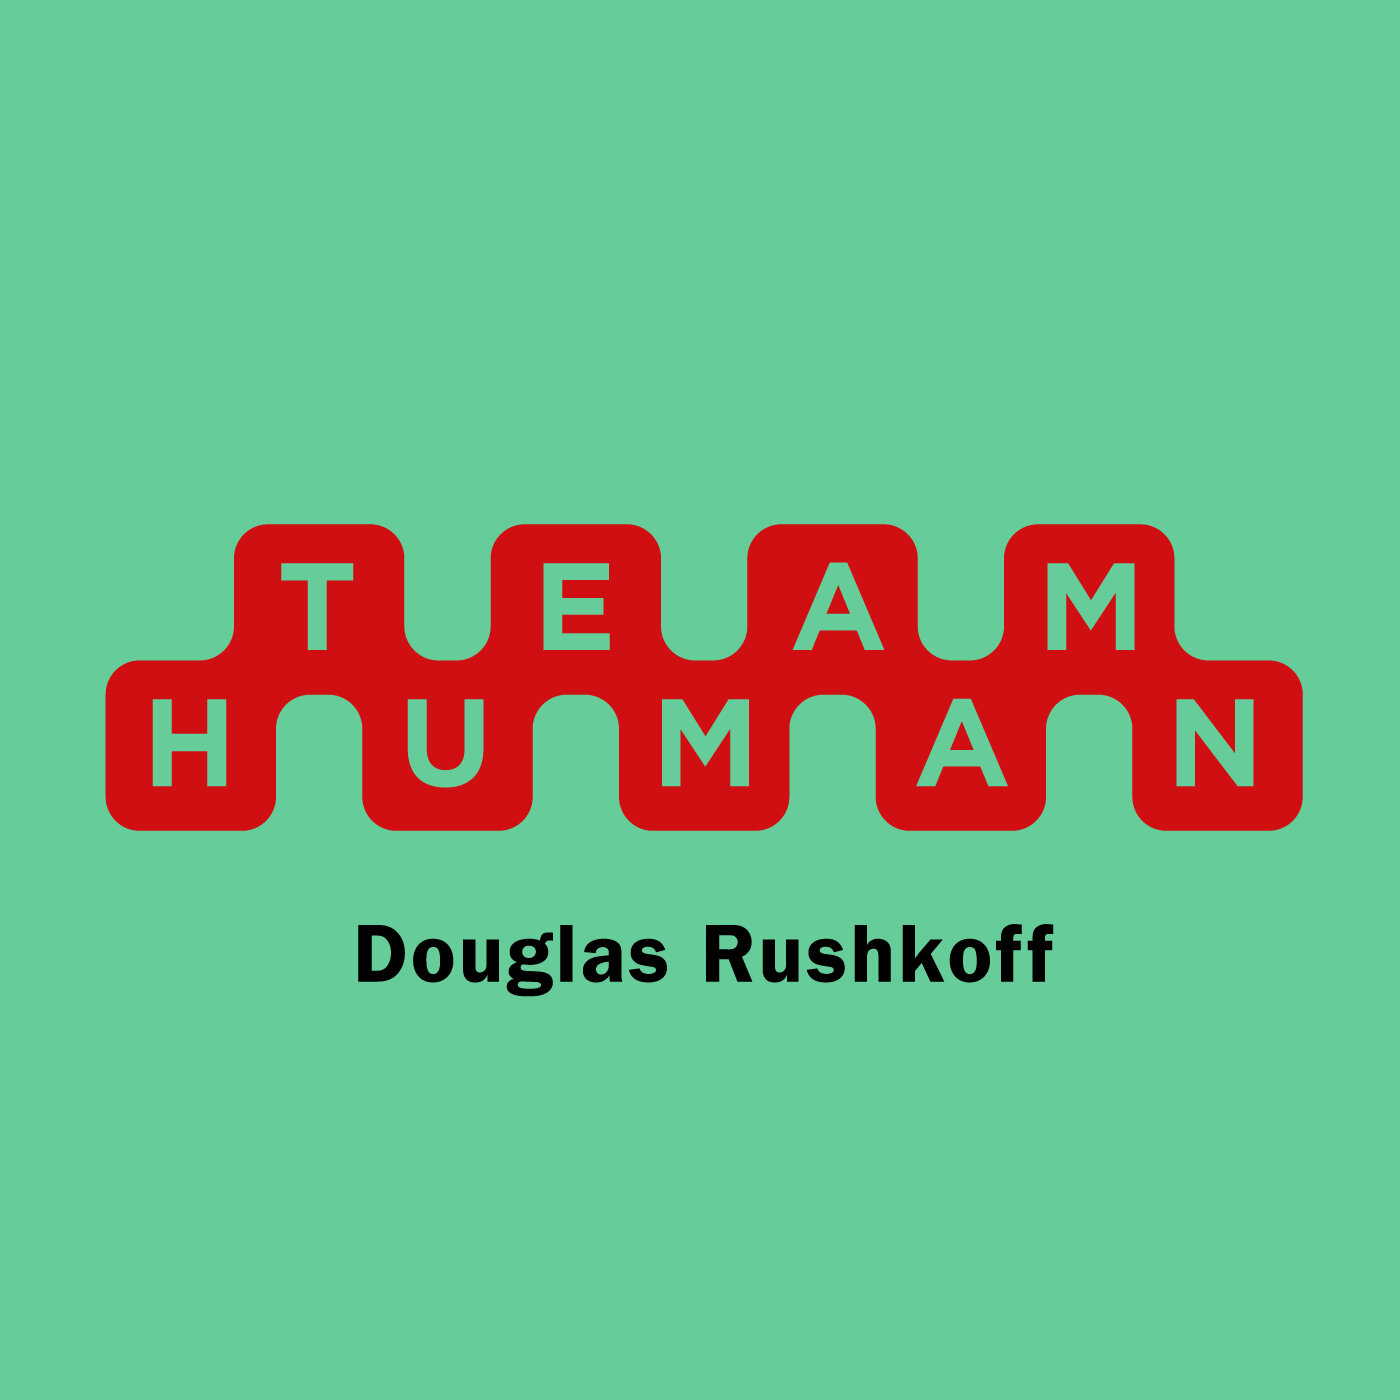 (c) Teamhuman.fm